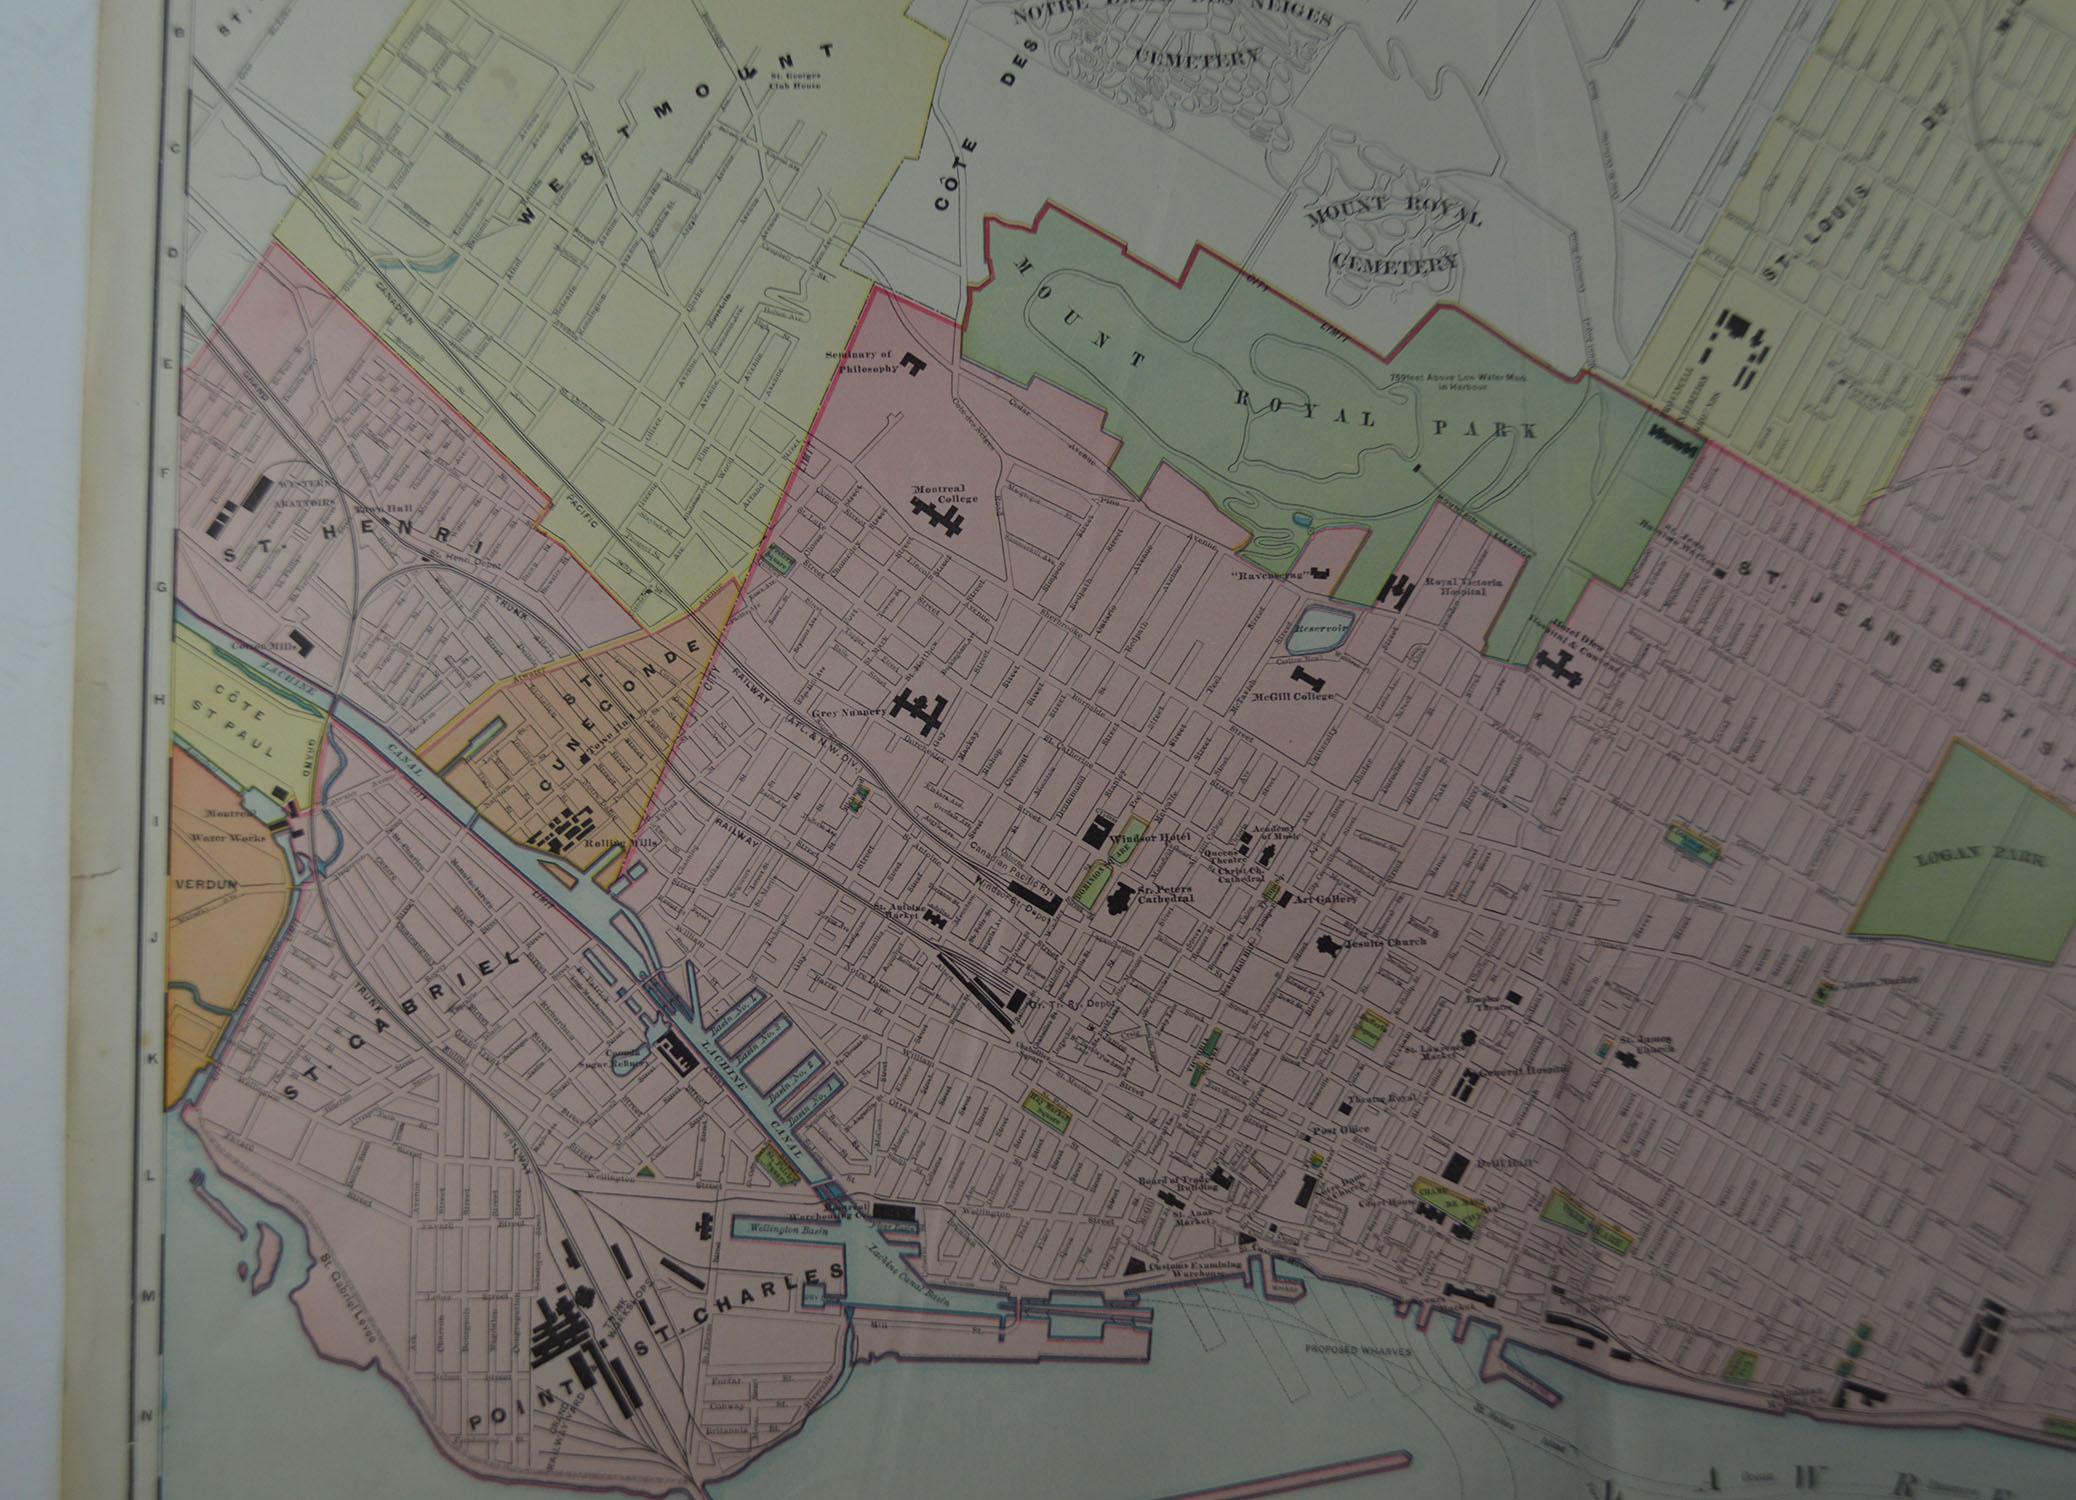 American Large Original Antique City Plan of Montreal, Canada, circa 1900